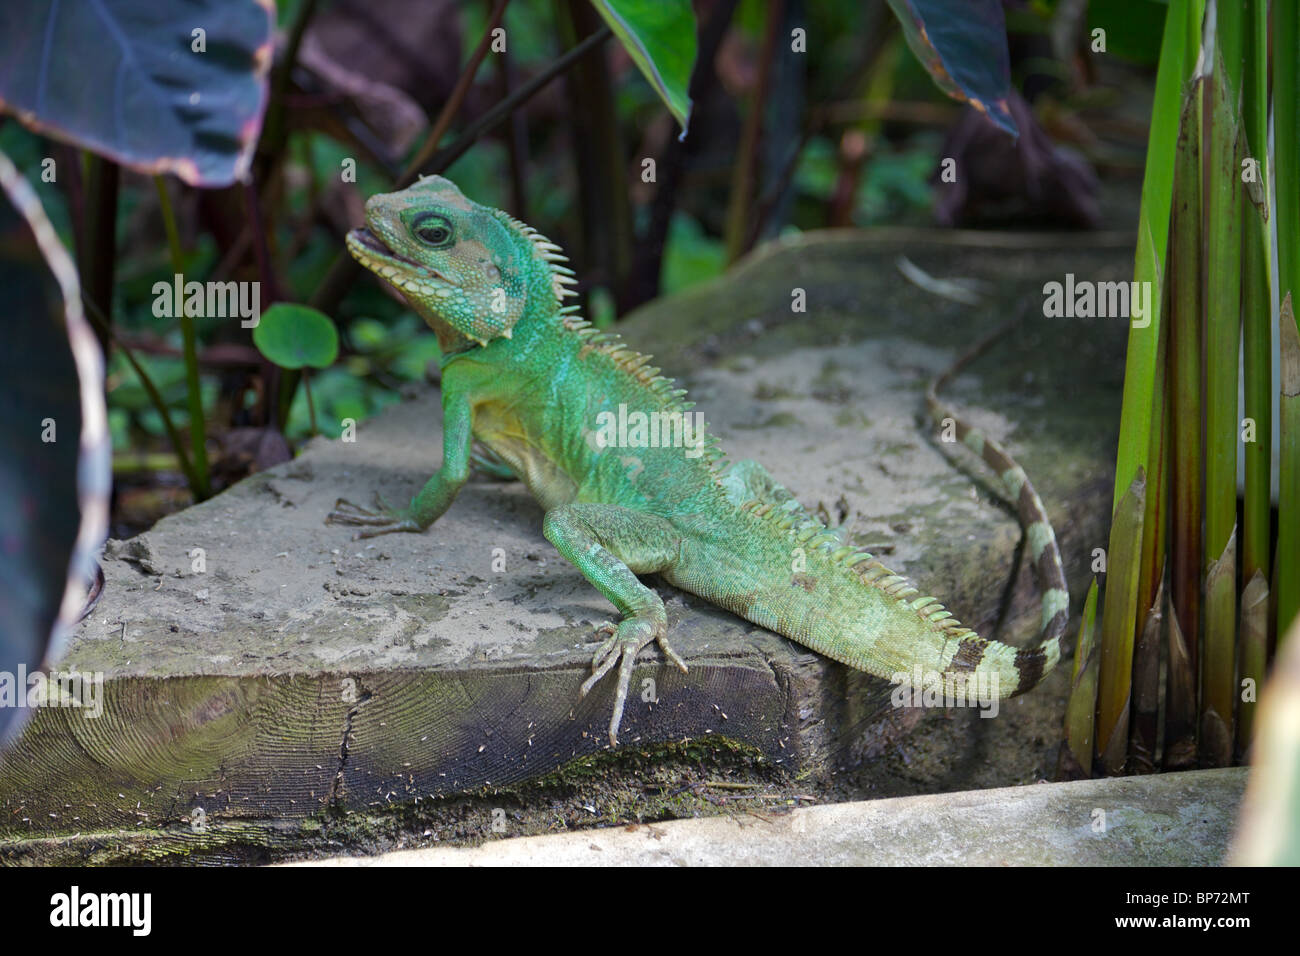 La iguana verde o Iguana común Foto de stock